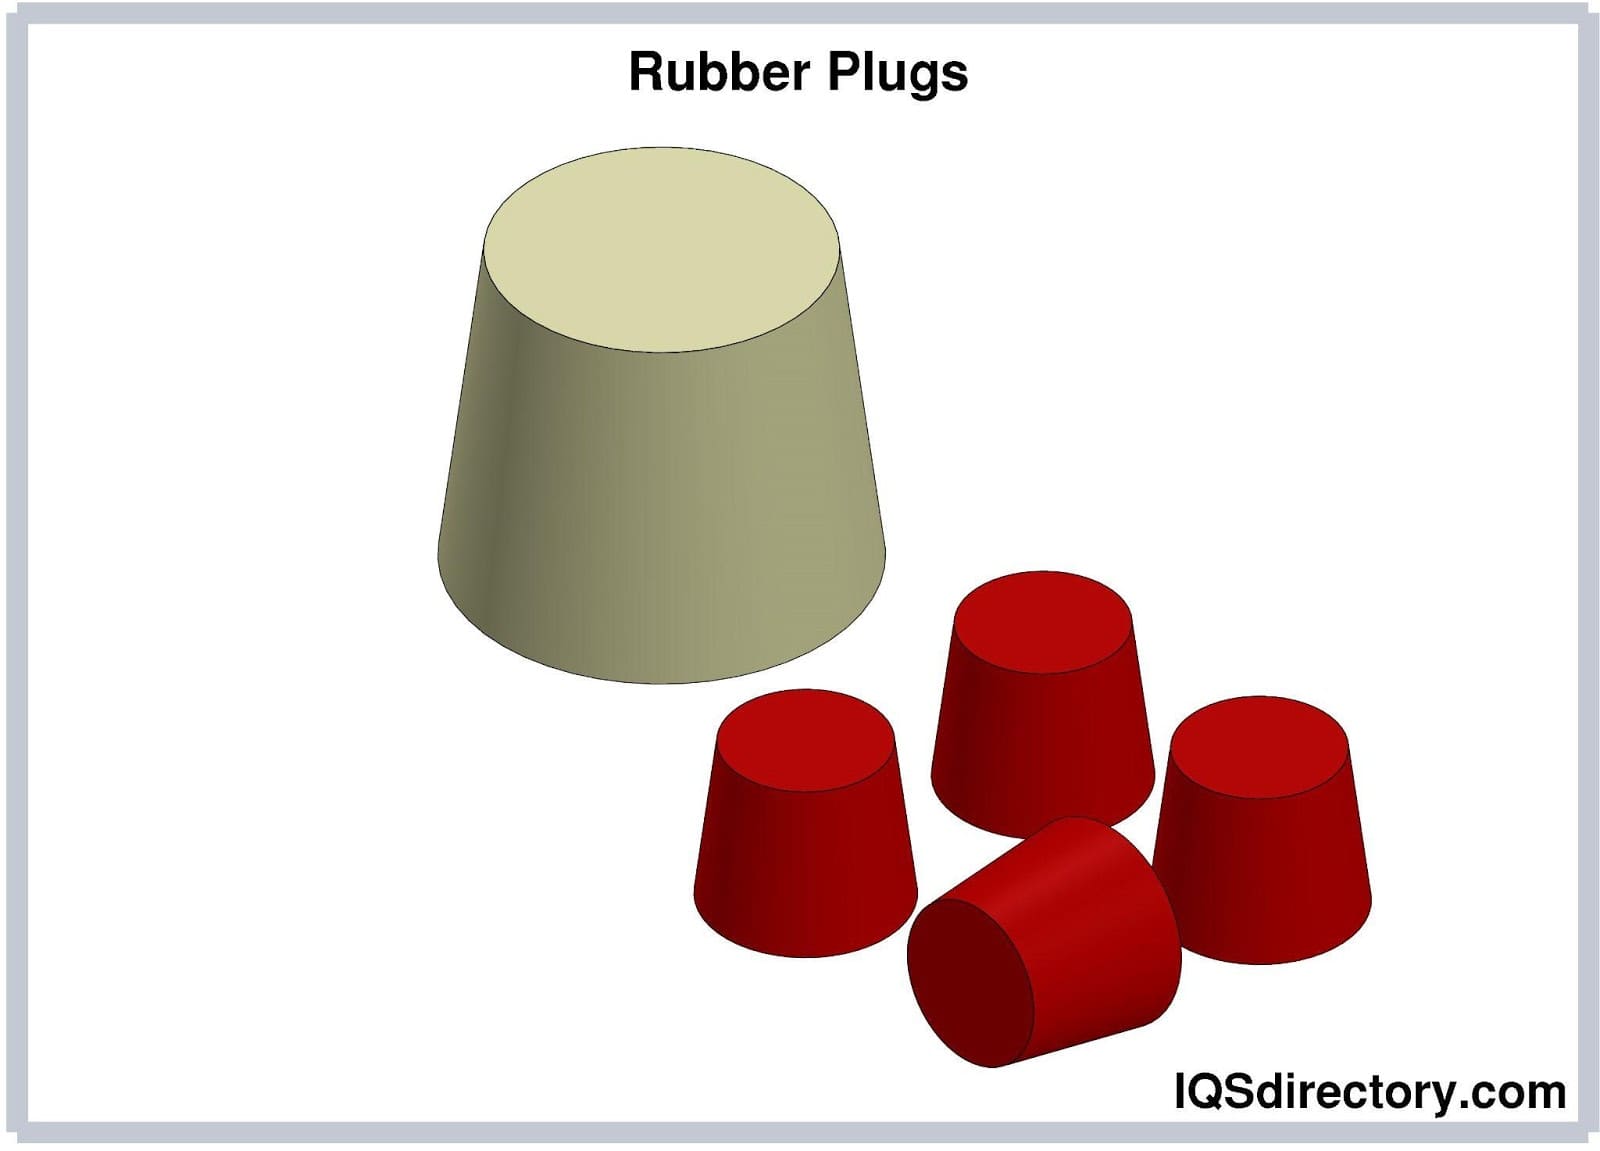 Rubber Plugs